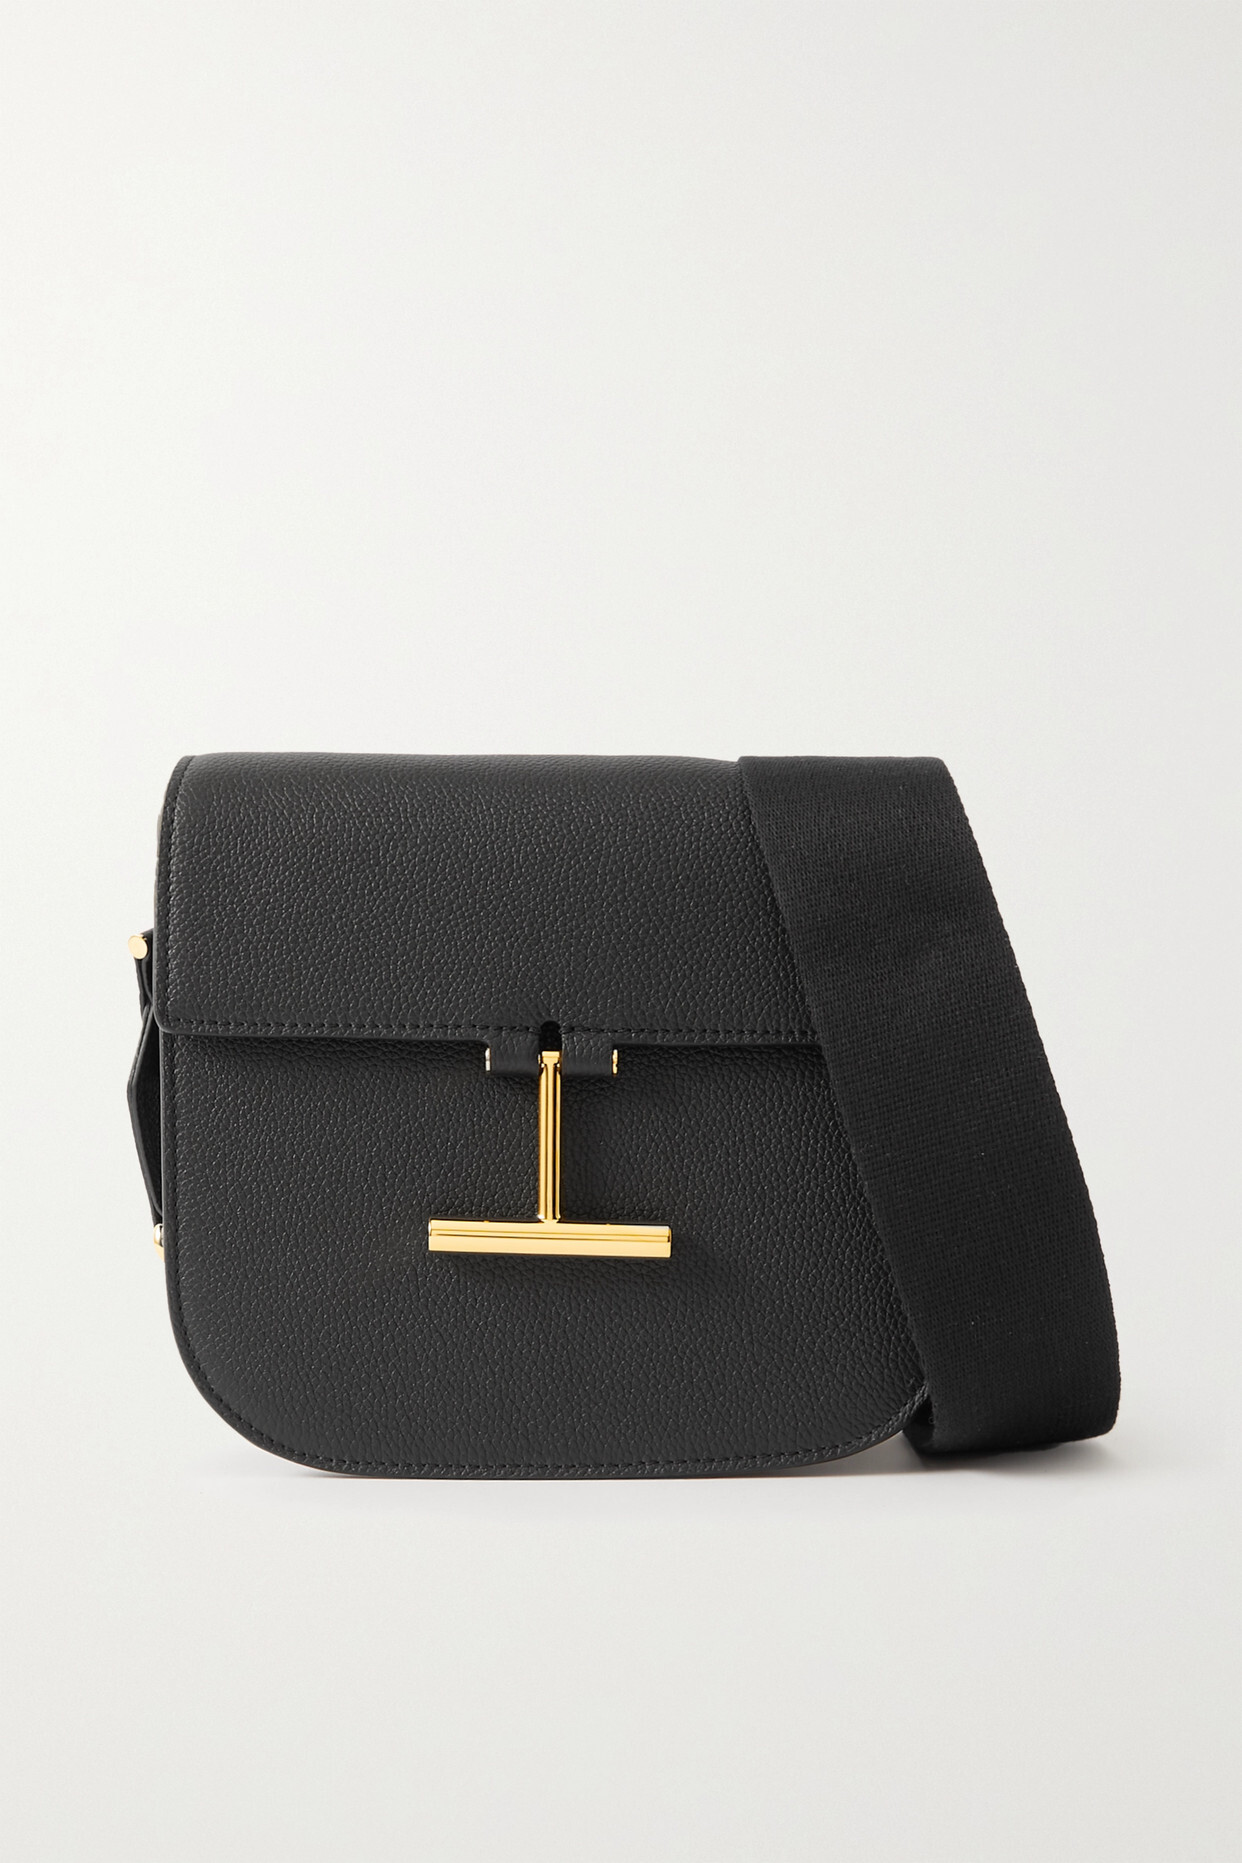 TOM FORD - Tara Mini Textured-leather Shoulder Bag - Black